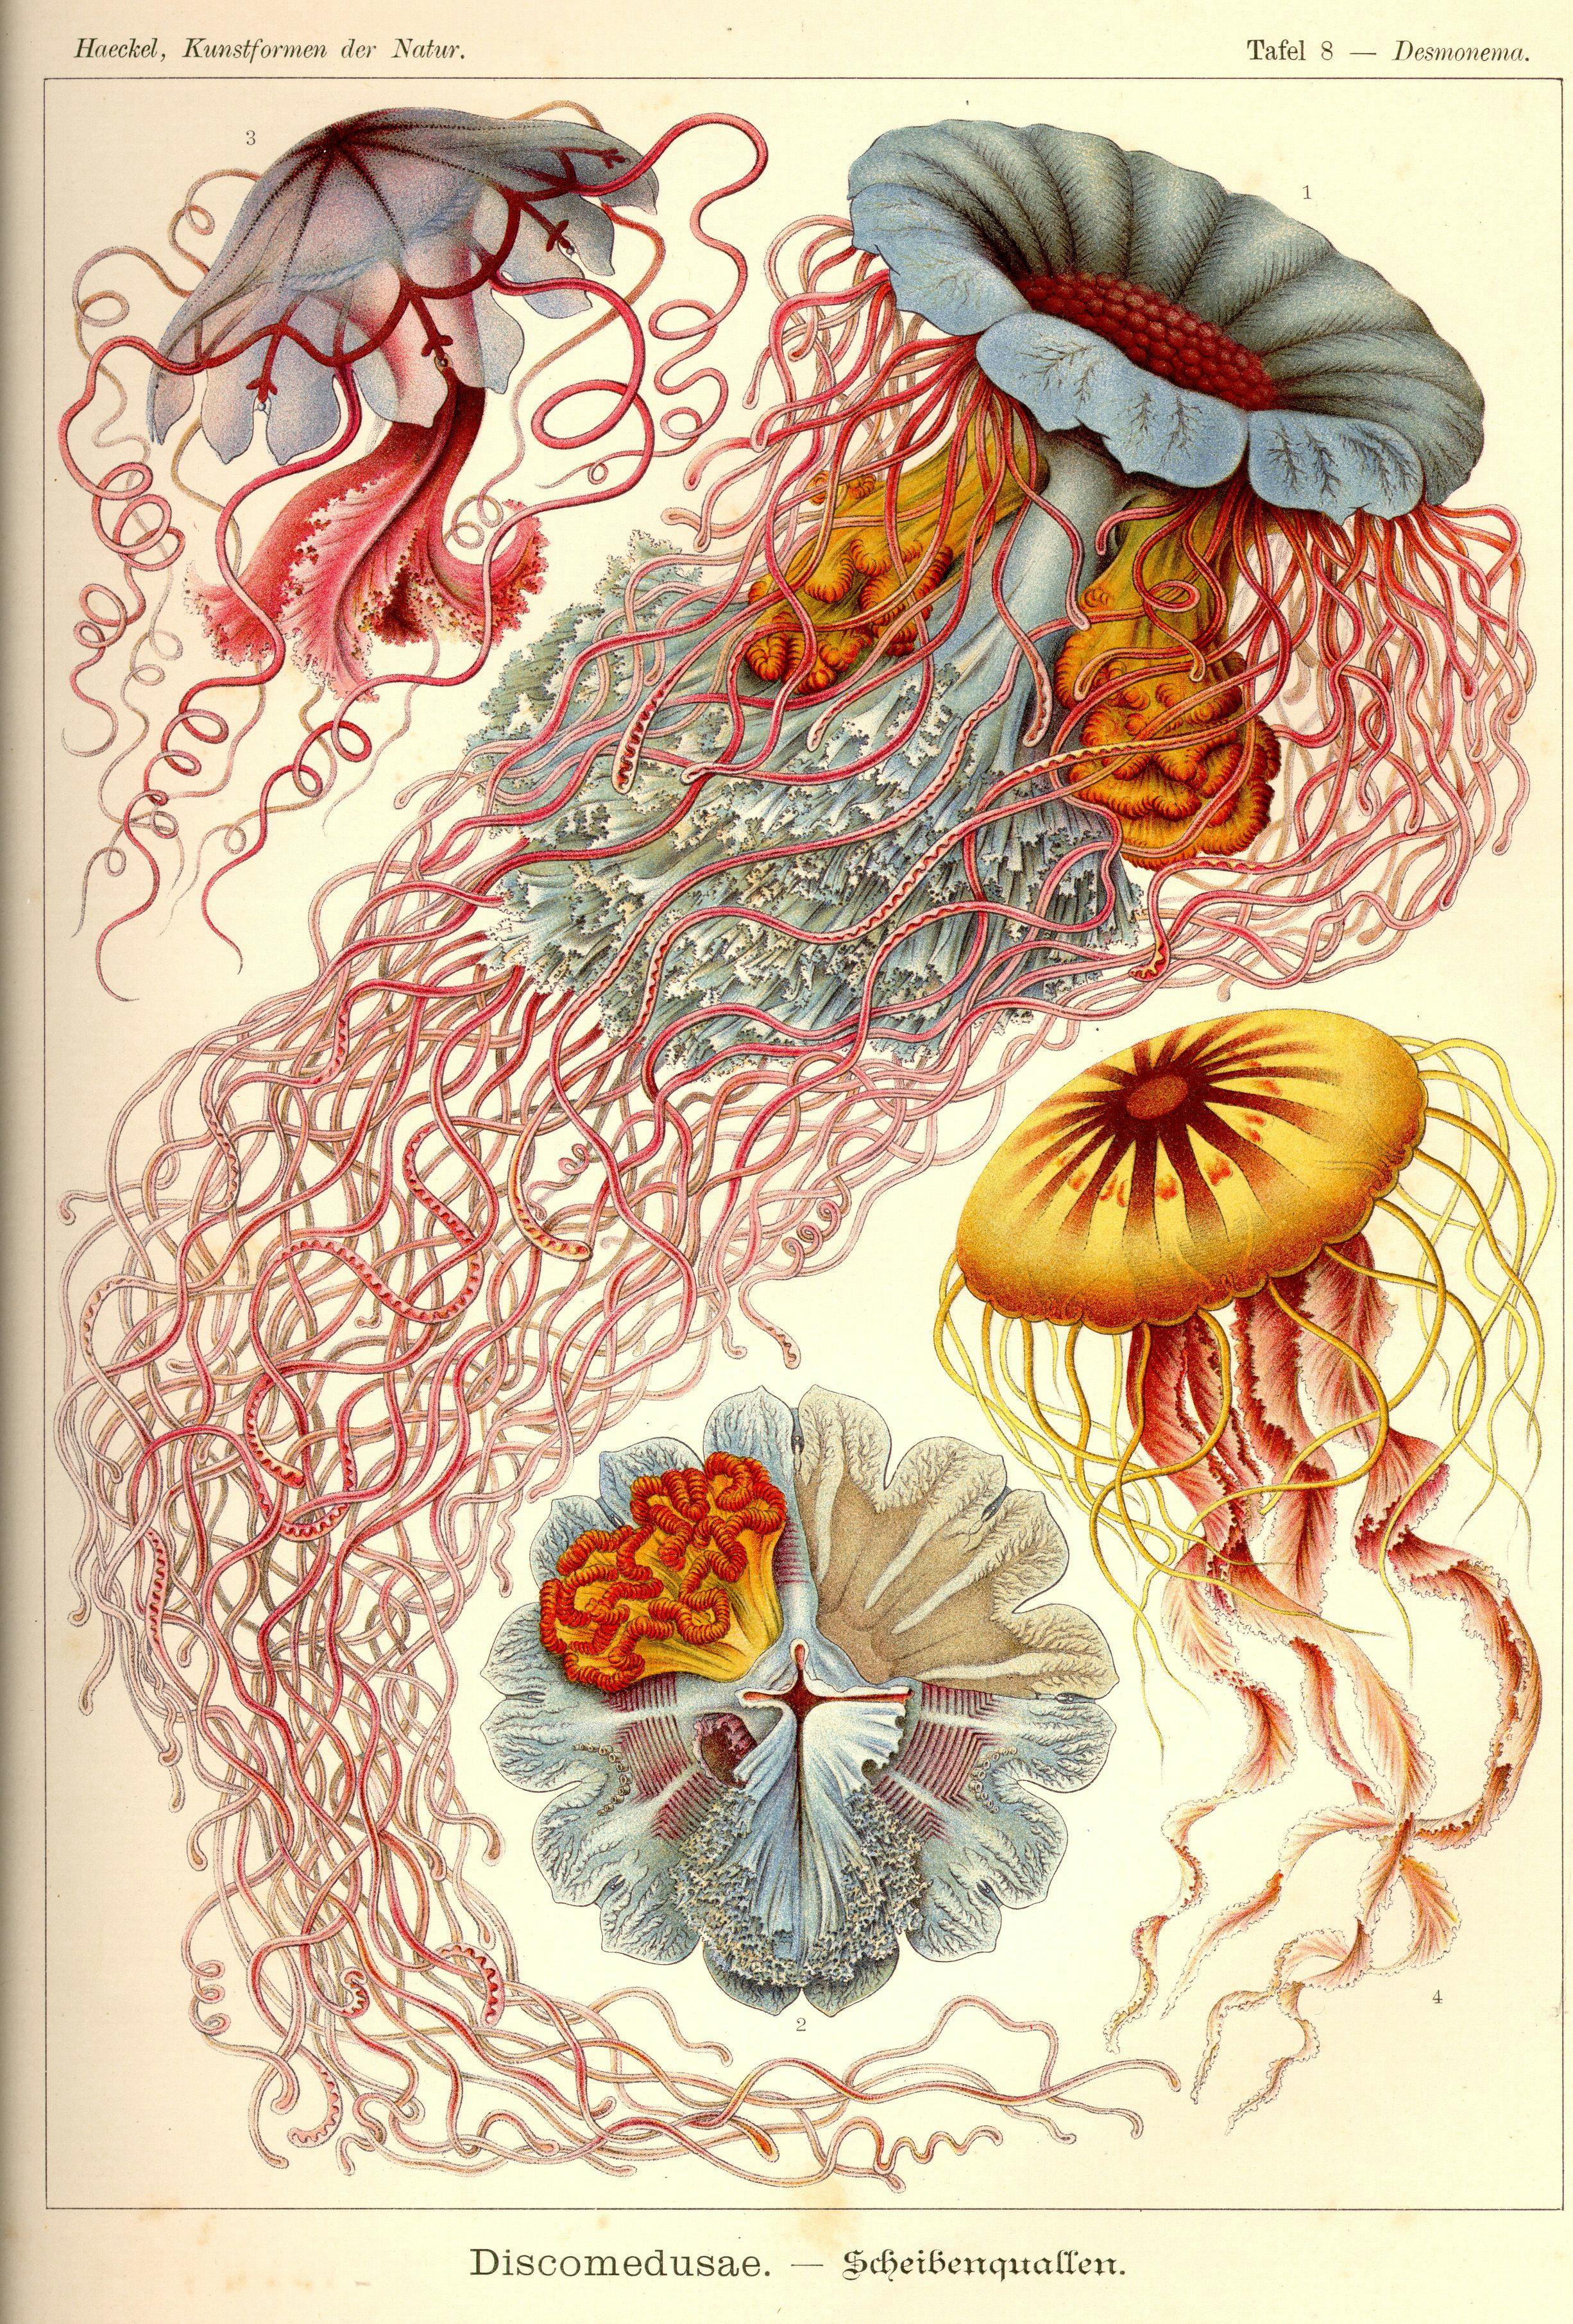 Konstverk: Ernst Haeckel, Kunstformen der Natur, plate 8, 1899–1904